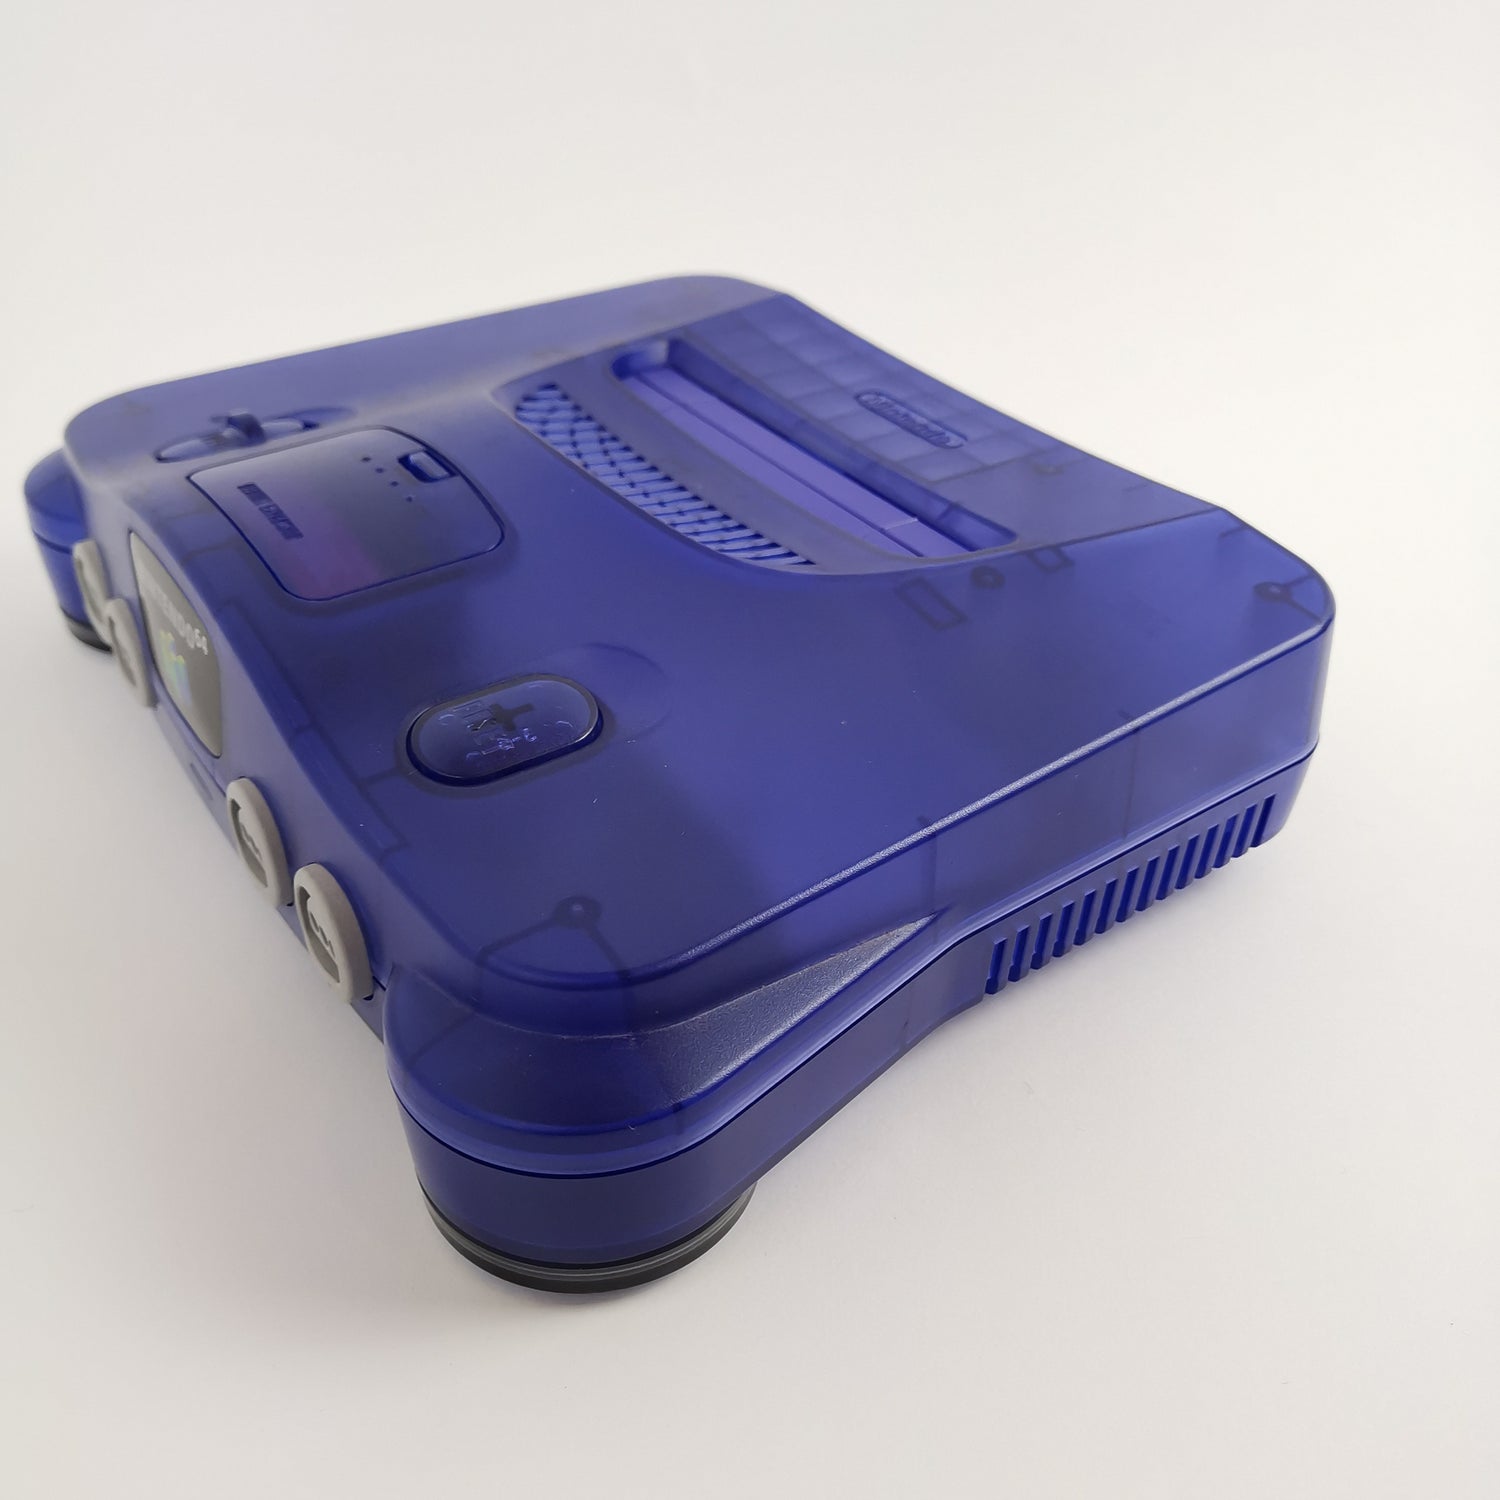 Nintendo 64 Konsole : Atomic Purple / Lila Transparent Dunkel Blau | N64 - PAL